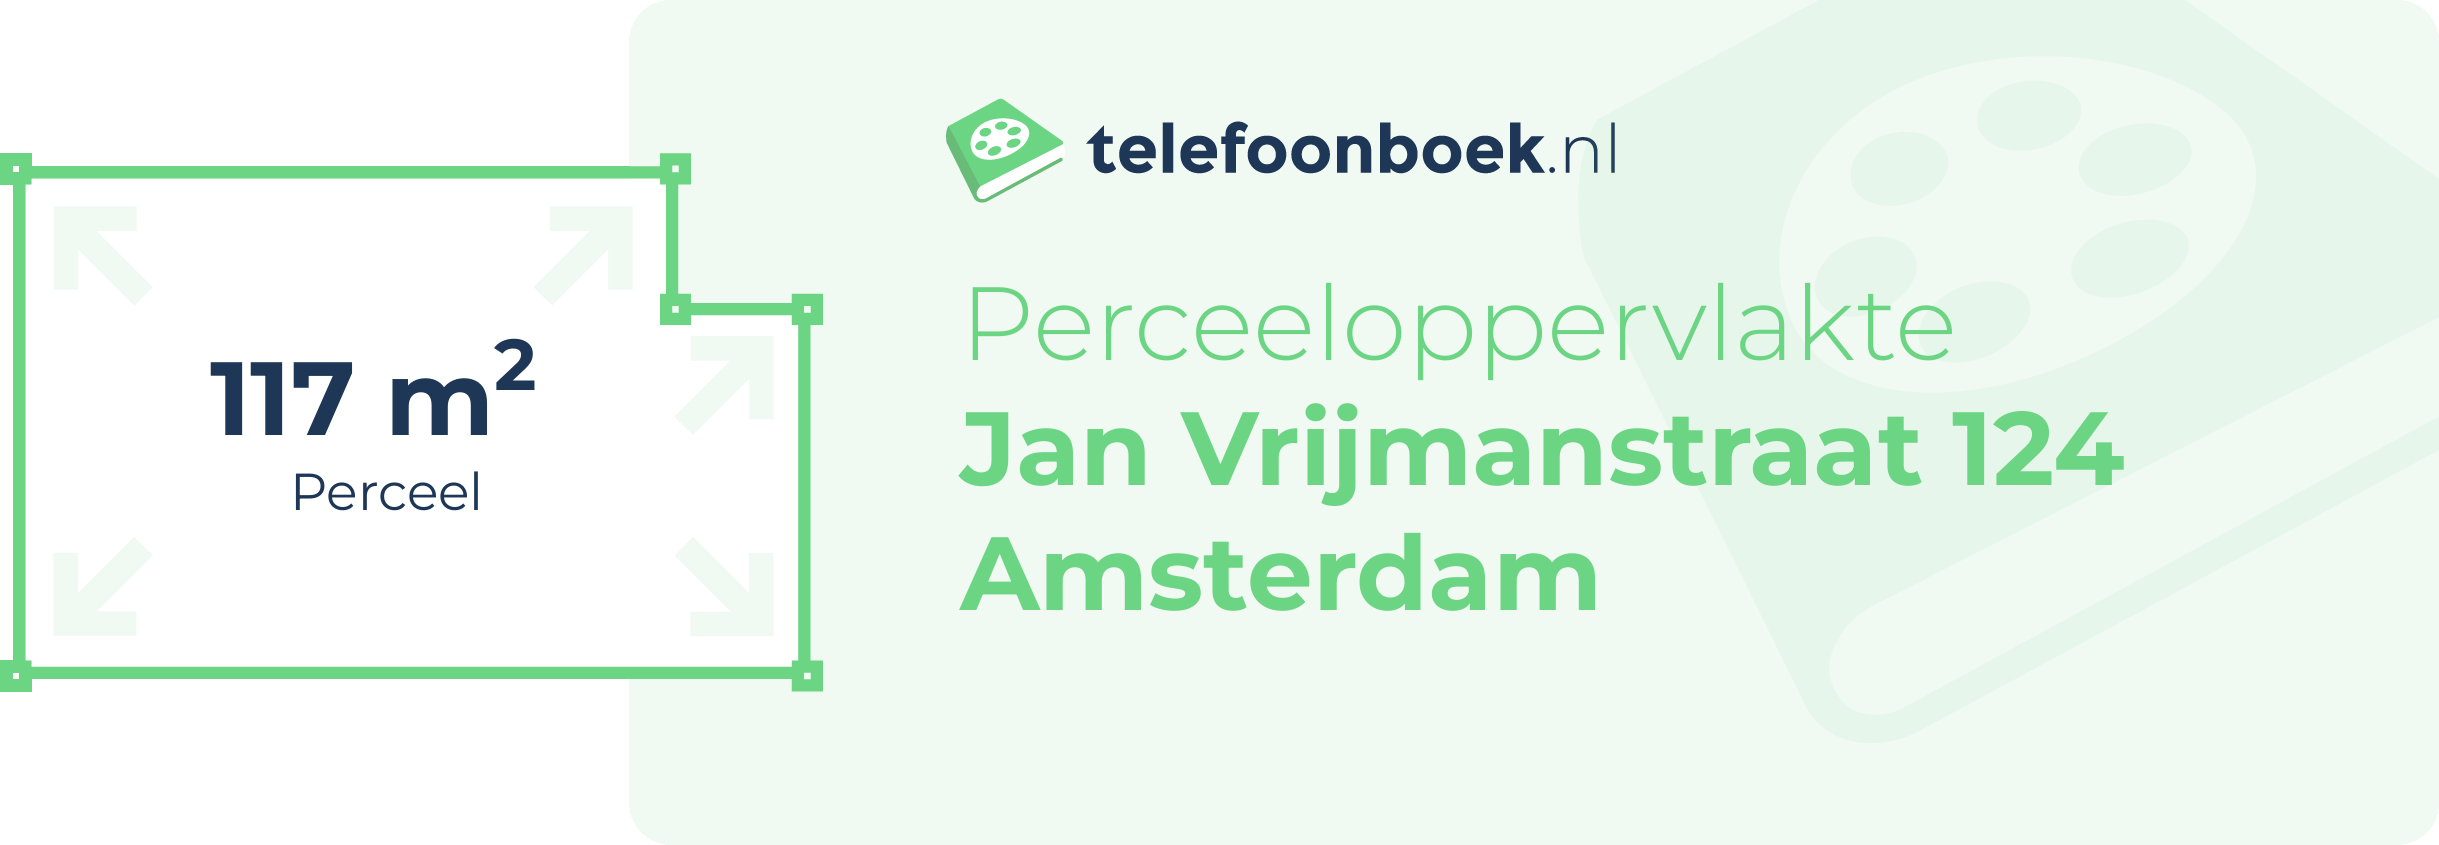 Perceeloppervlakte Jan Vrijmanstraat 124 Amsterdam